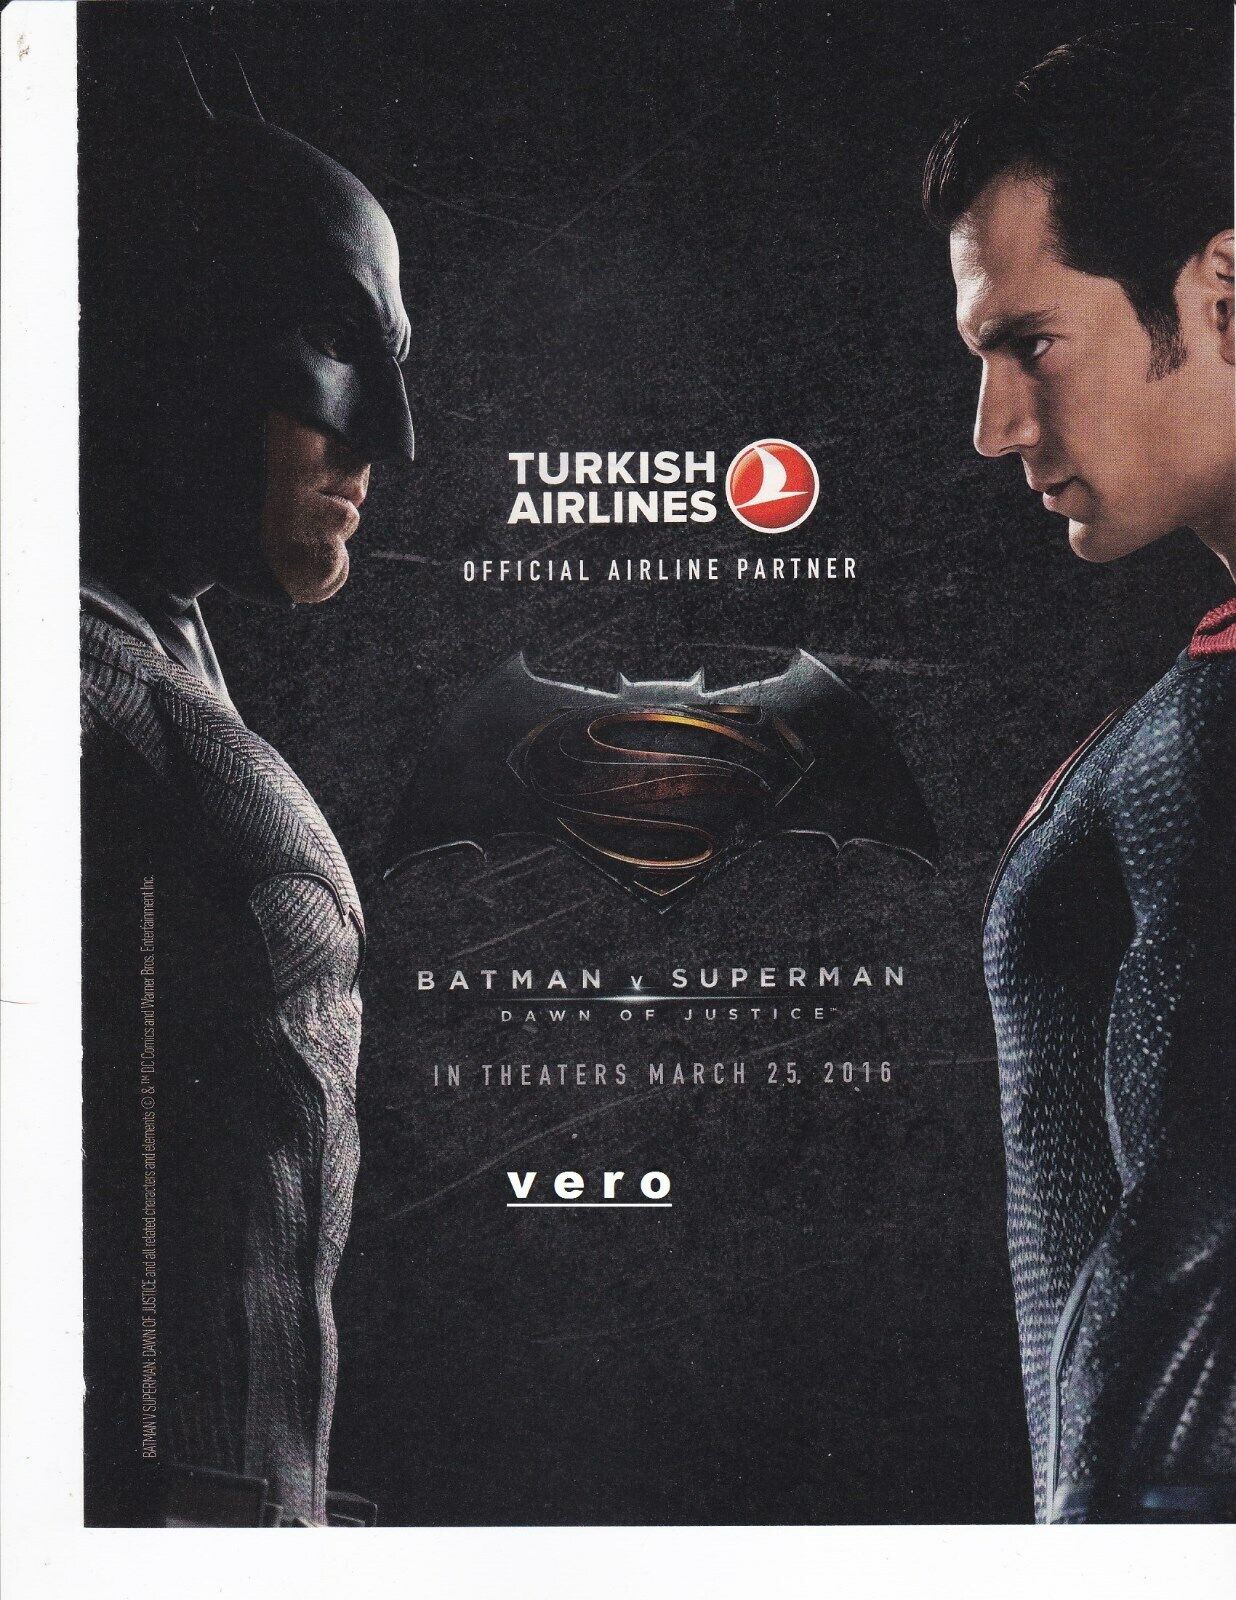 TURKISH airline magazine ad 2016 clipping print page vtg BATMAN v SUPERMAN 